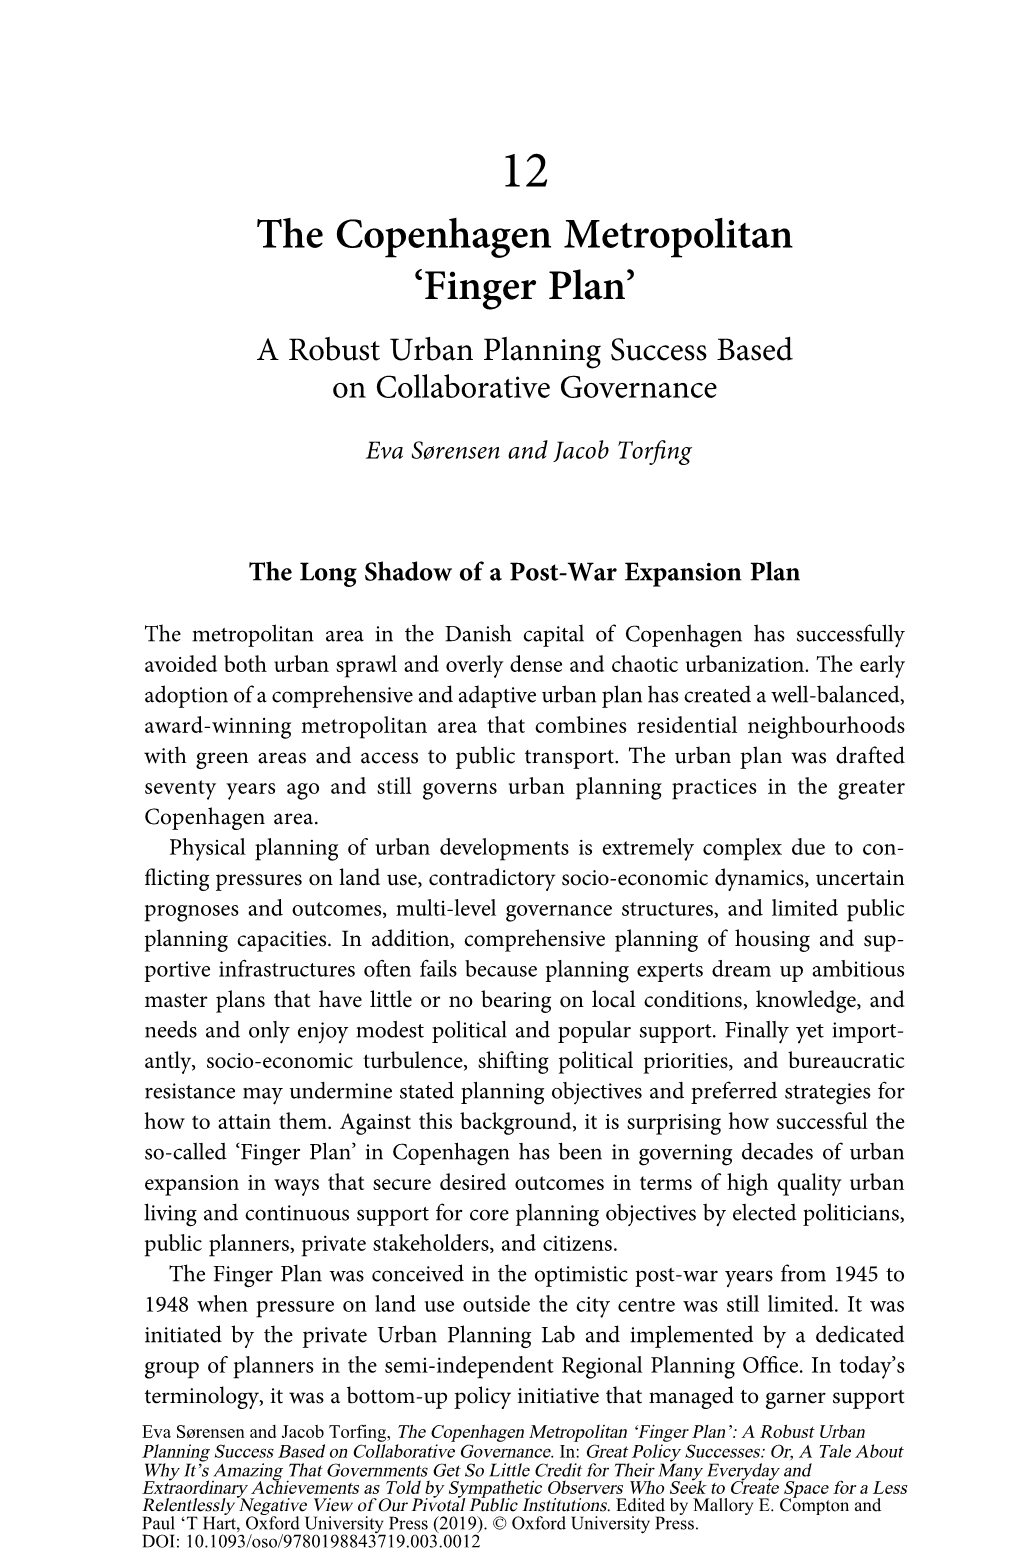 Finger Plan’ a Robust Urban Planning Success Based on Collaborative Governance